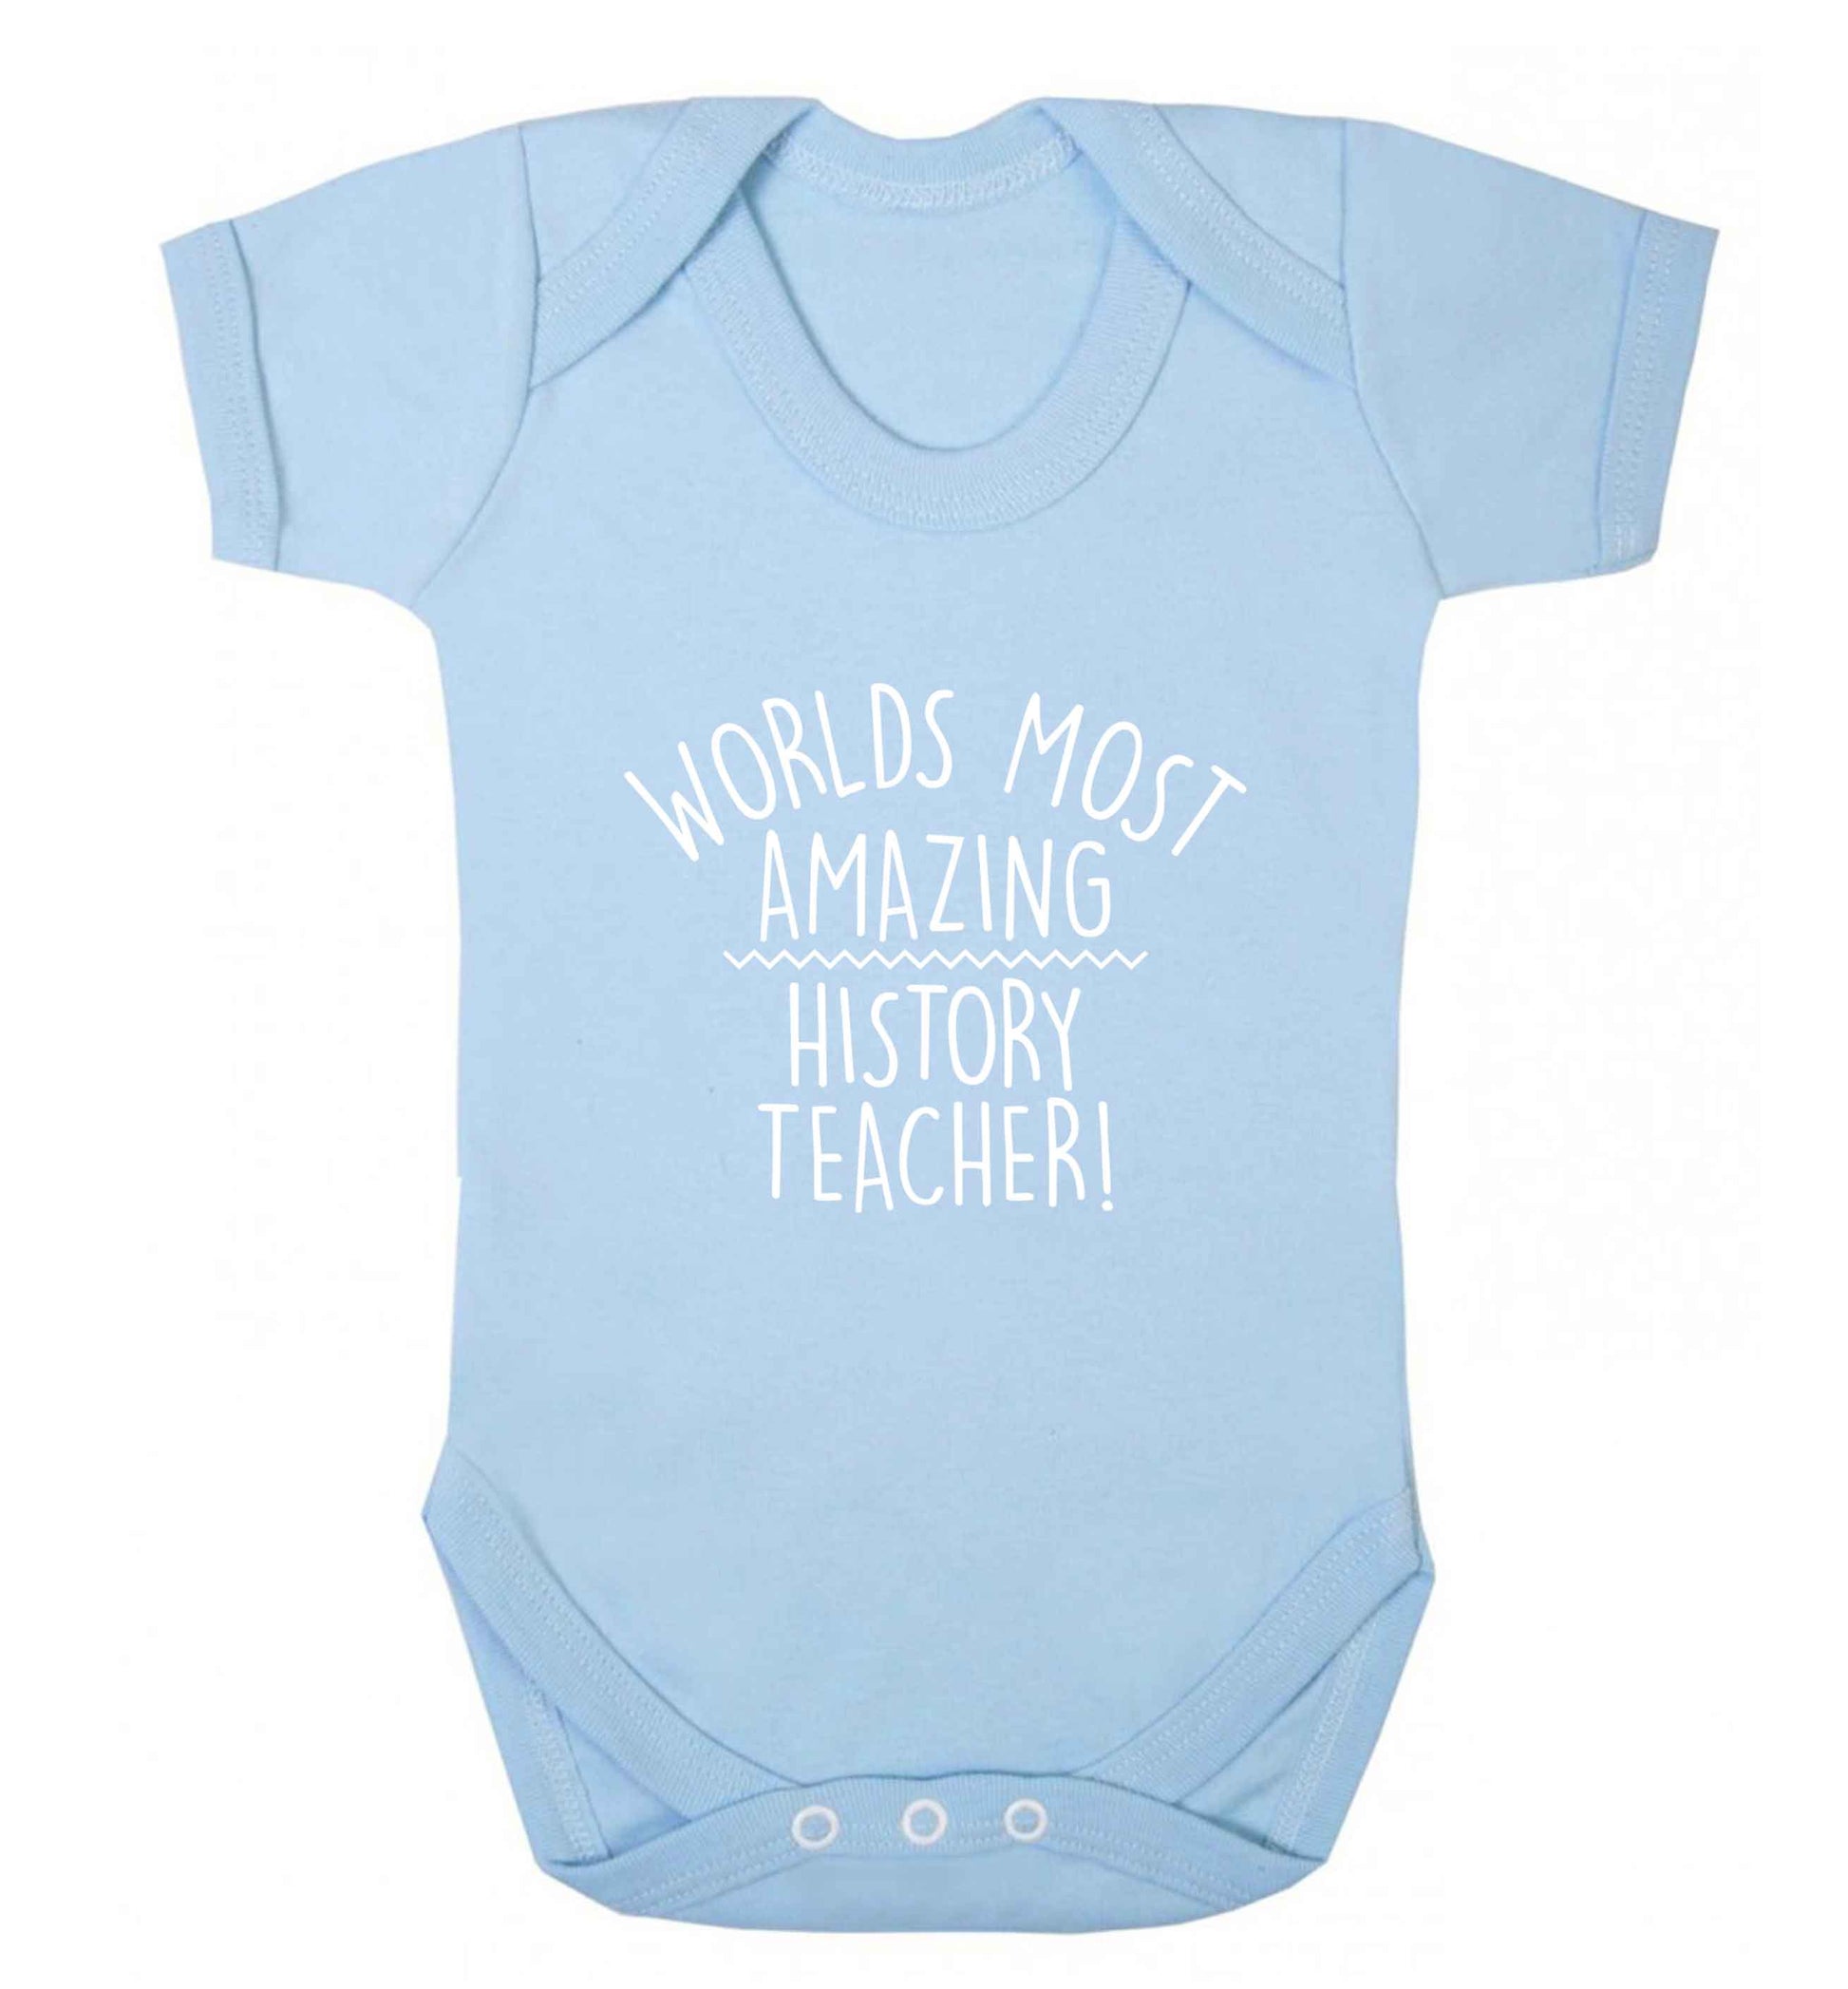 Worlds most amazing History teacher baby vest pale blue 18-24 months